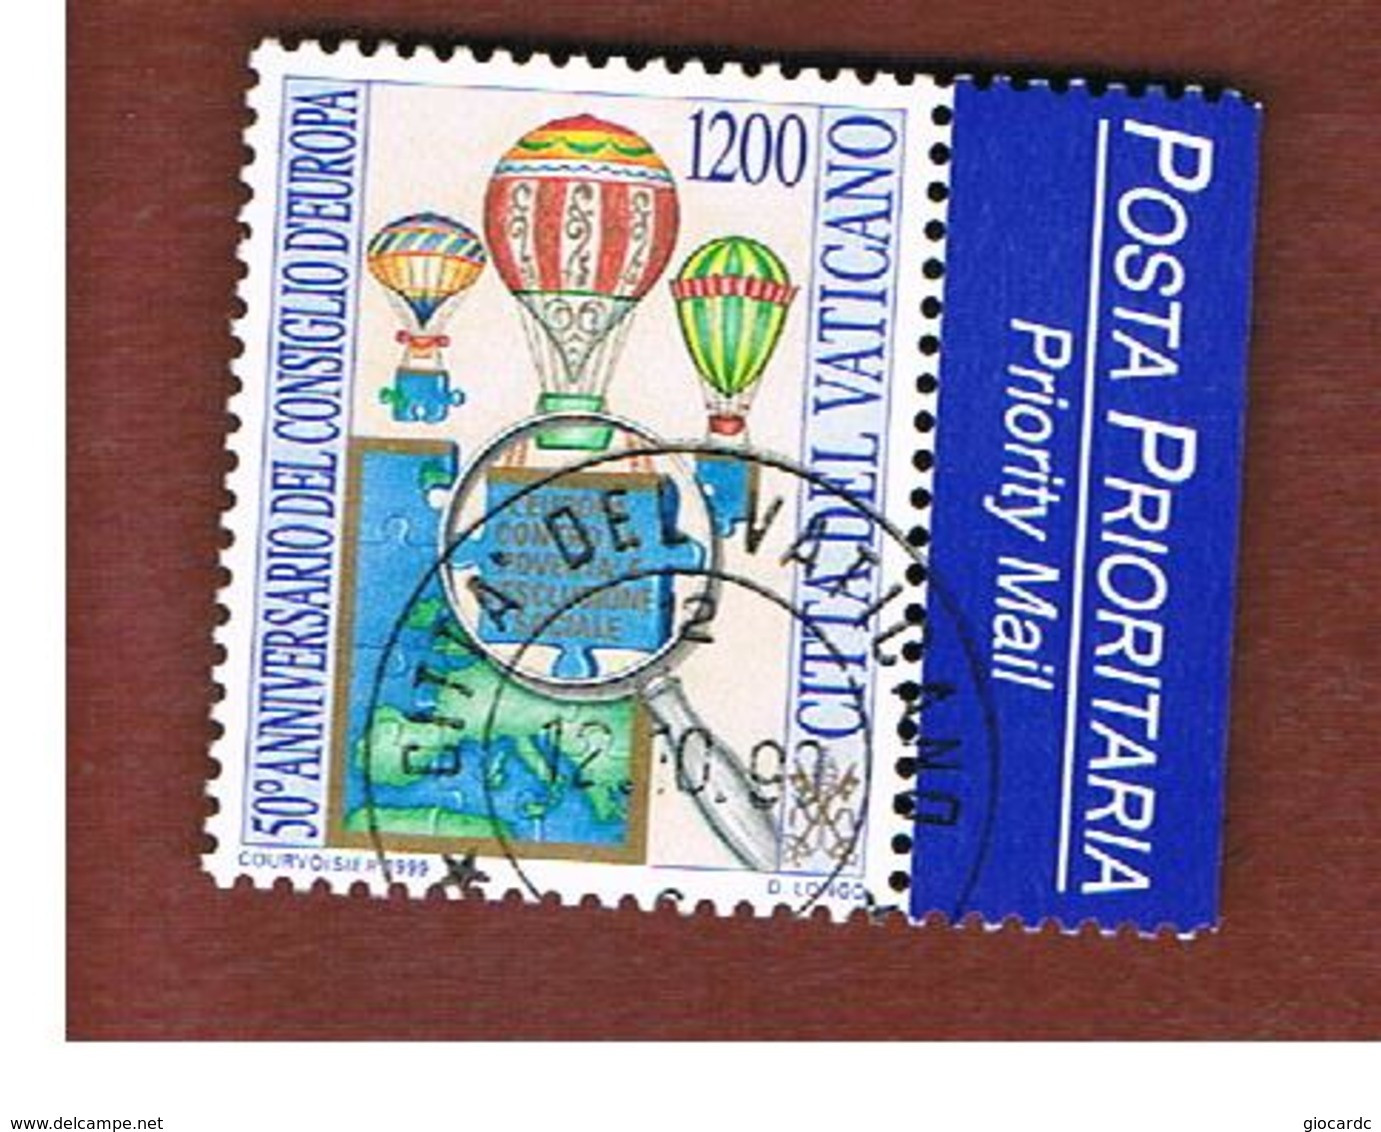 VATICANO - VATICAN - UNIF. 1171  - 1999   50^ ANNIV. CONSIGLIO D' EUROPA     -     (USED°) - Used Stamps